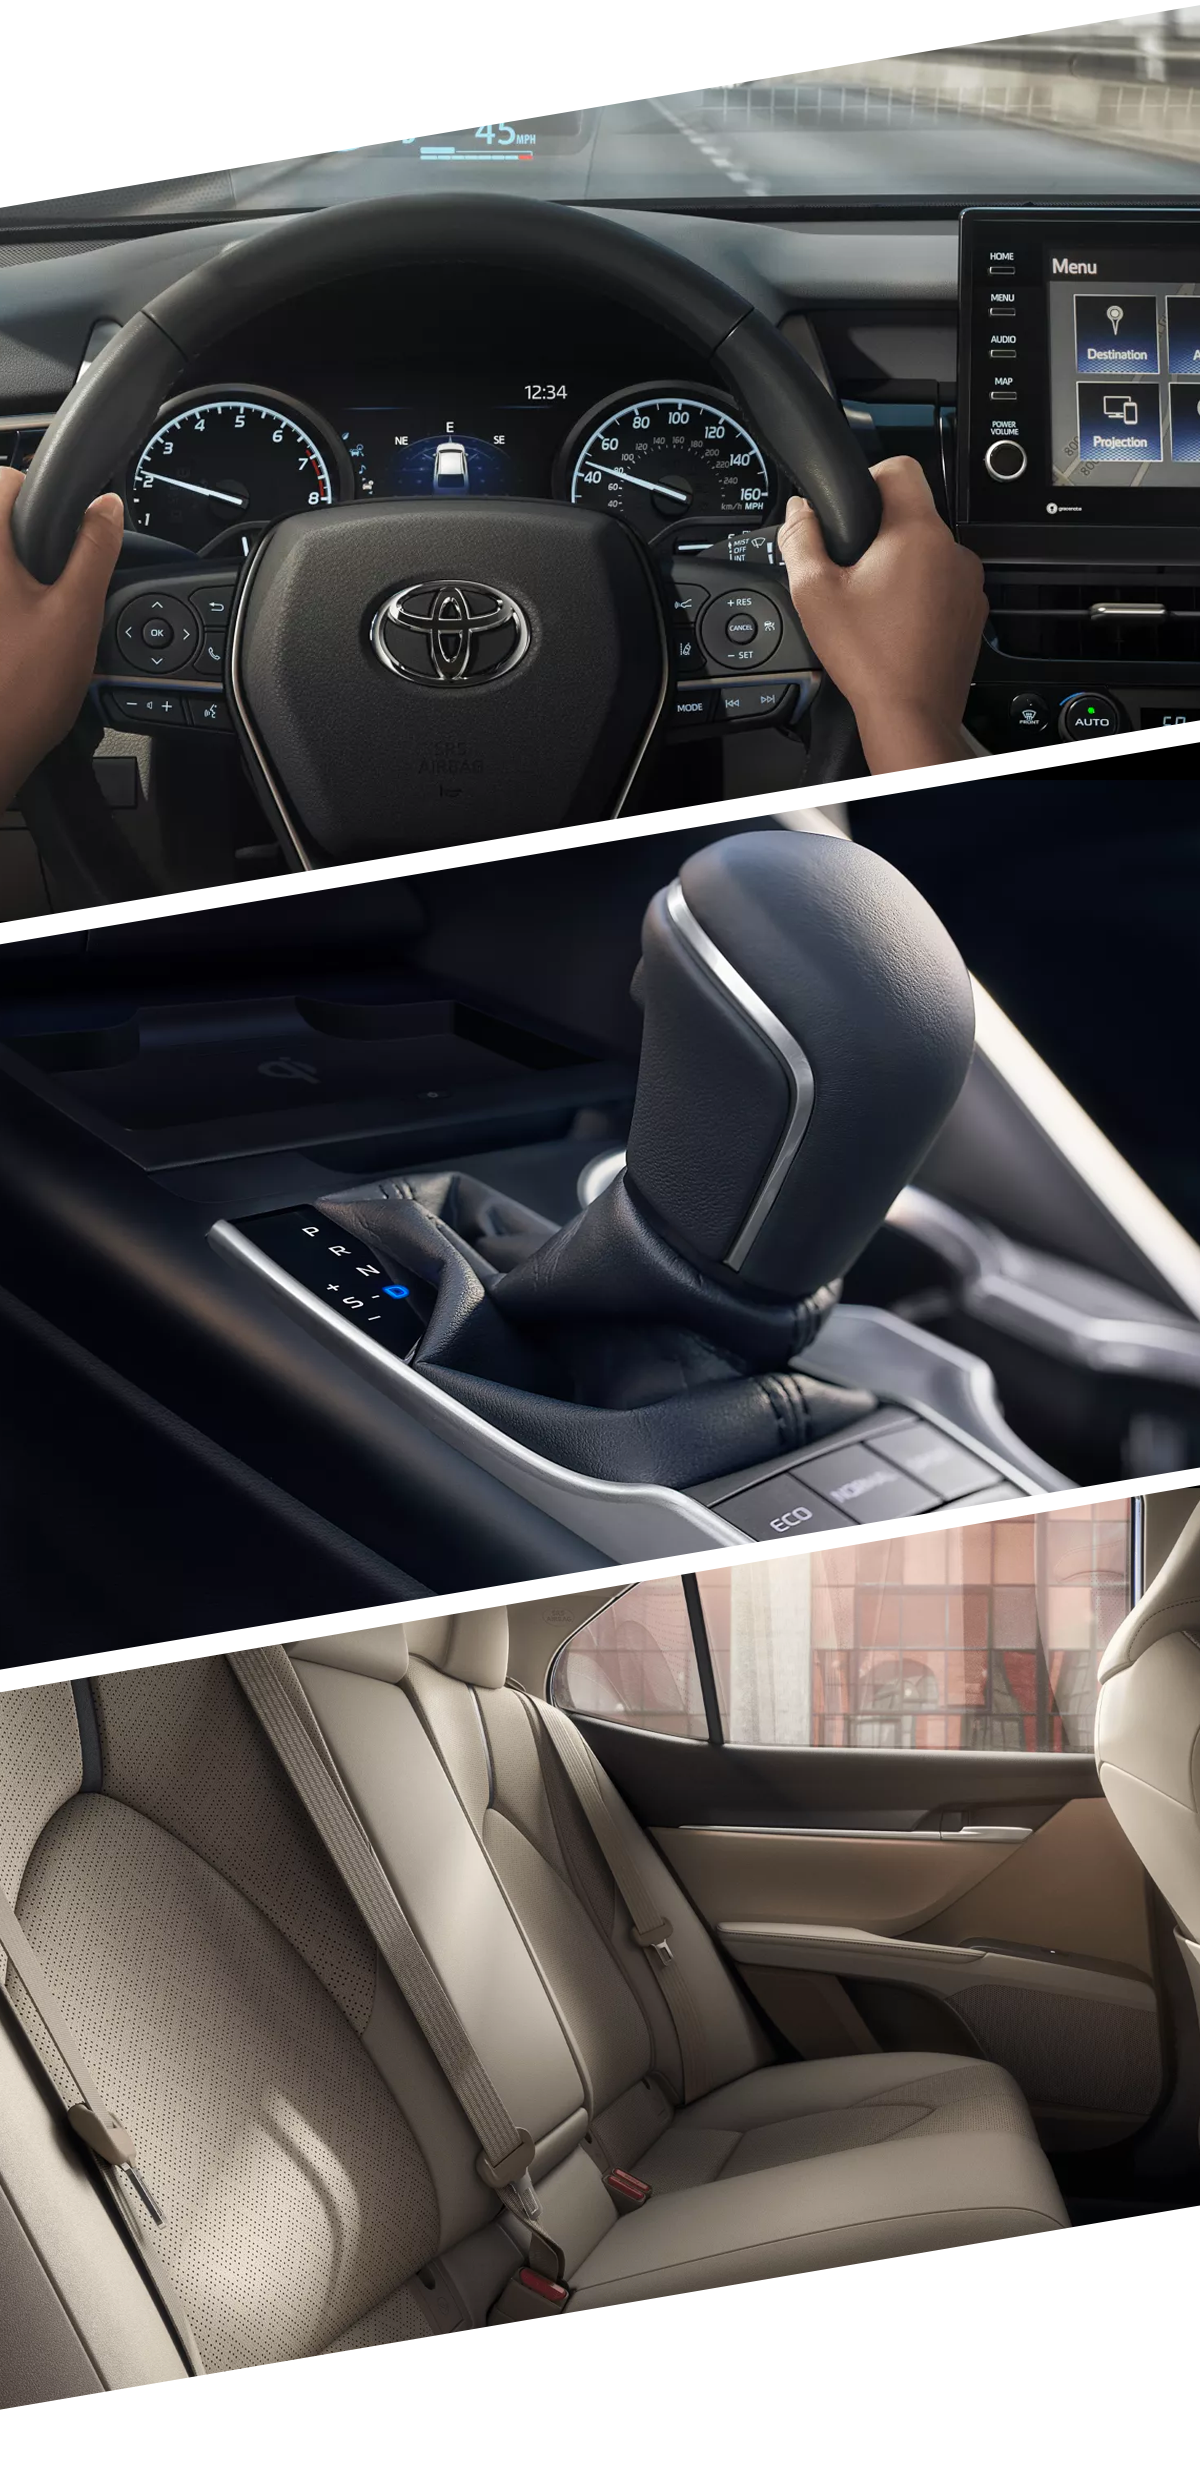 2021 Toyota Camry Interior Shots